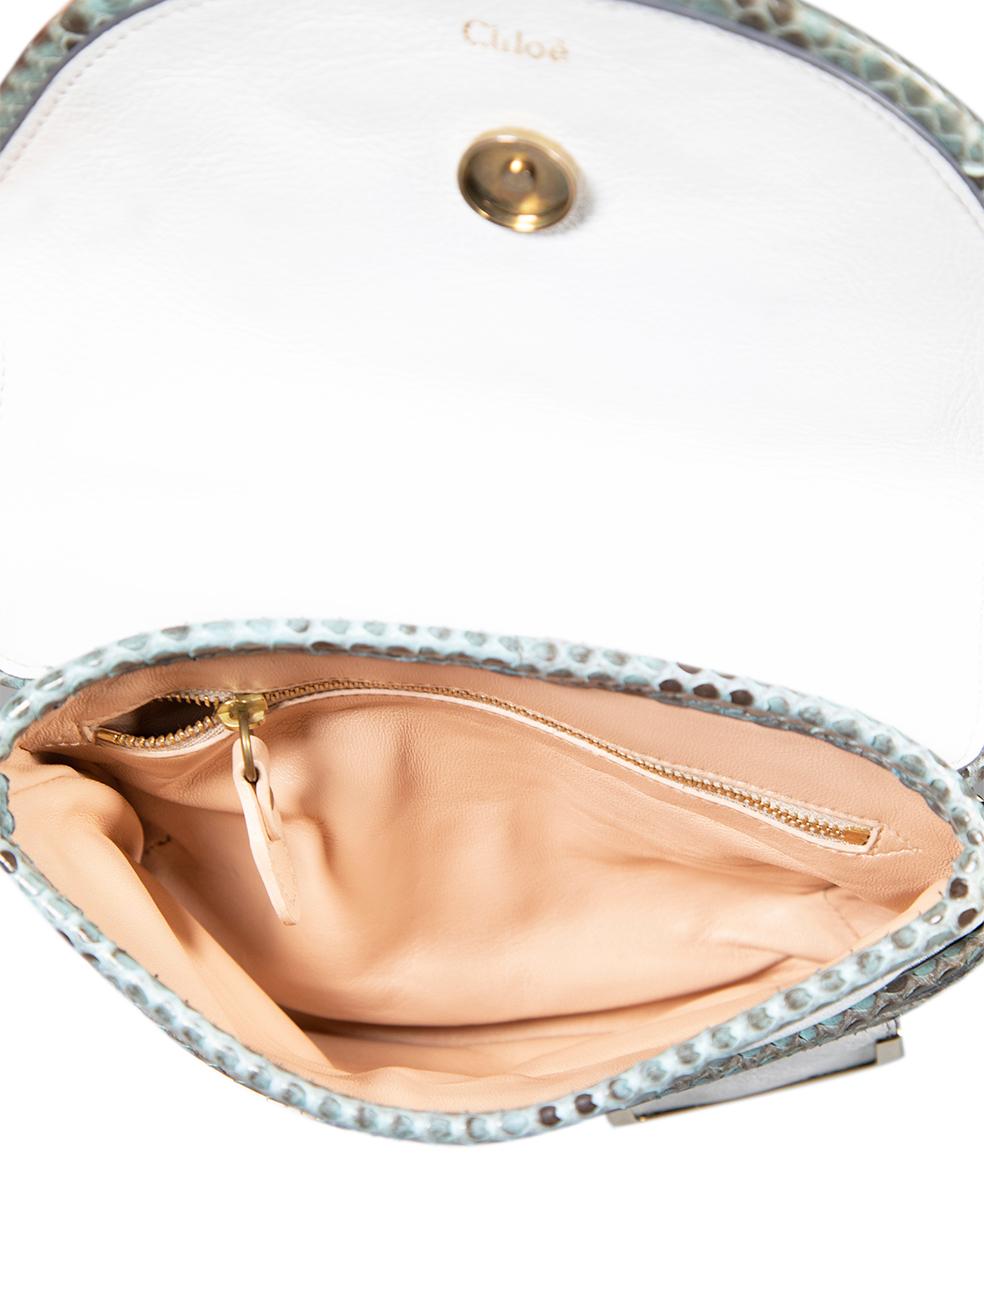 Chloé White Leather Python Trim Shoulder Bag For Sale 1